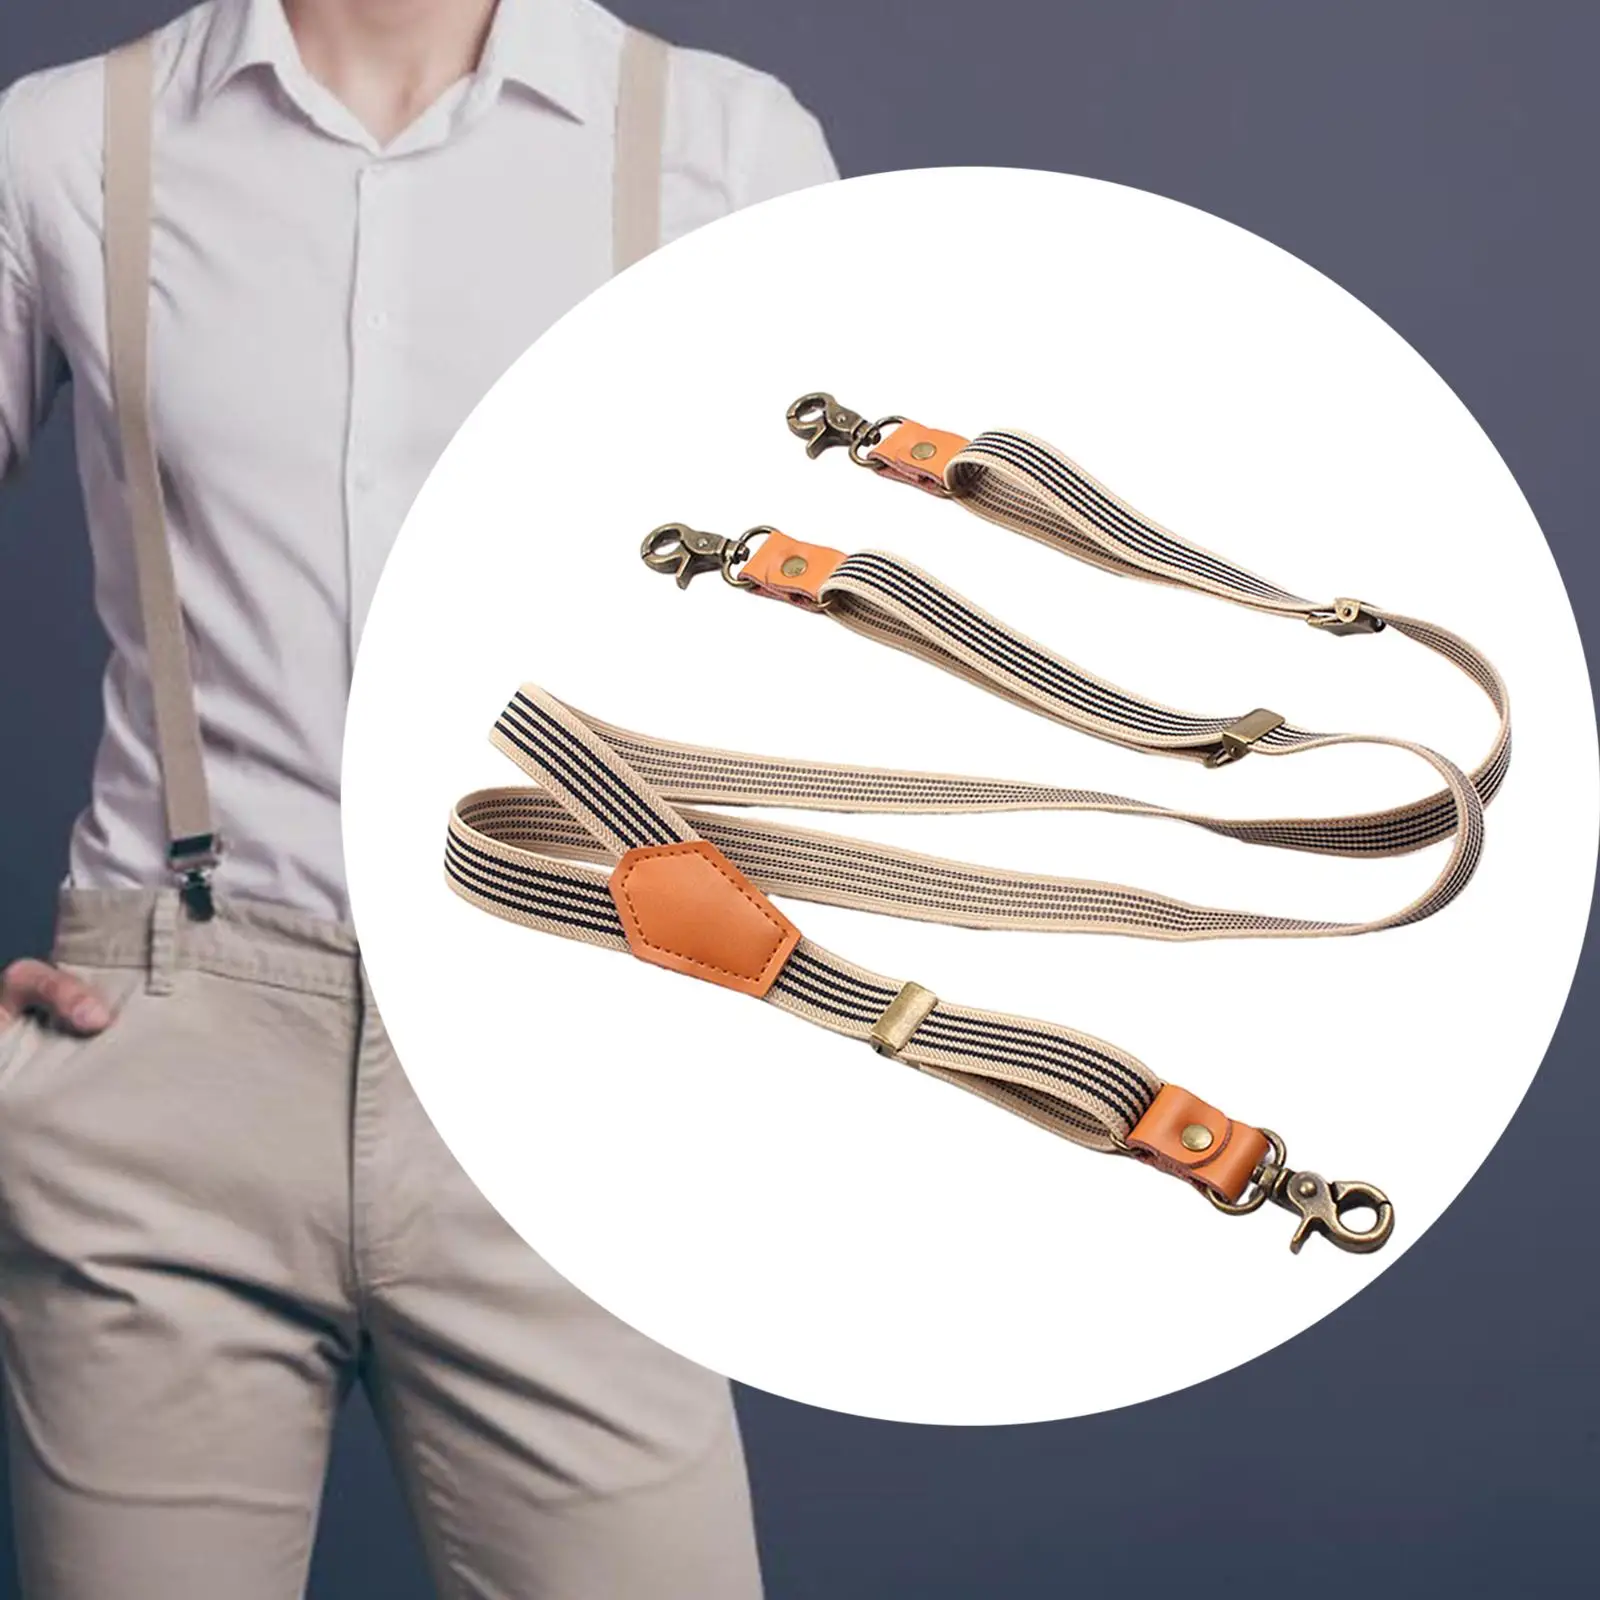 Suspenders for Men Heavy Duty Elastic Straps Adjustable Y Back Swivel Hooks Braces Fashion Adjustable Braces Belt Loops for Work